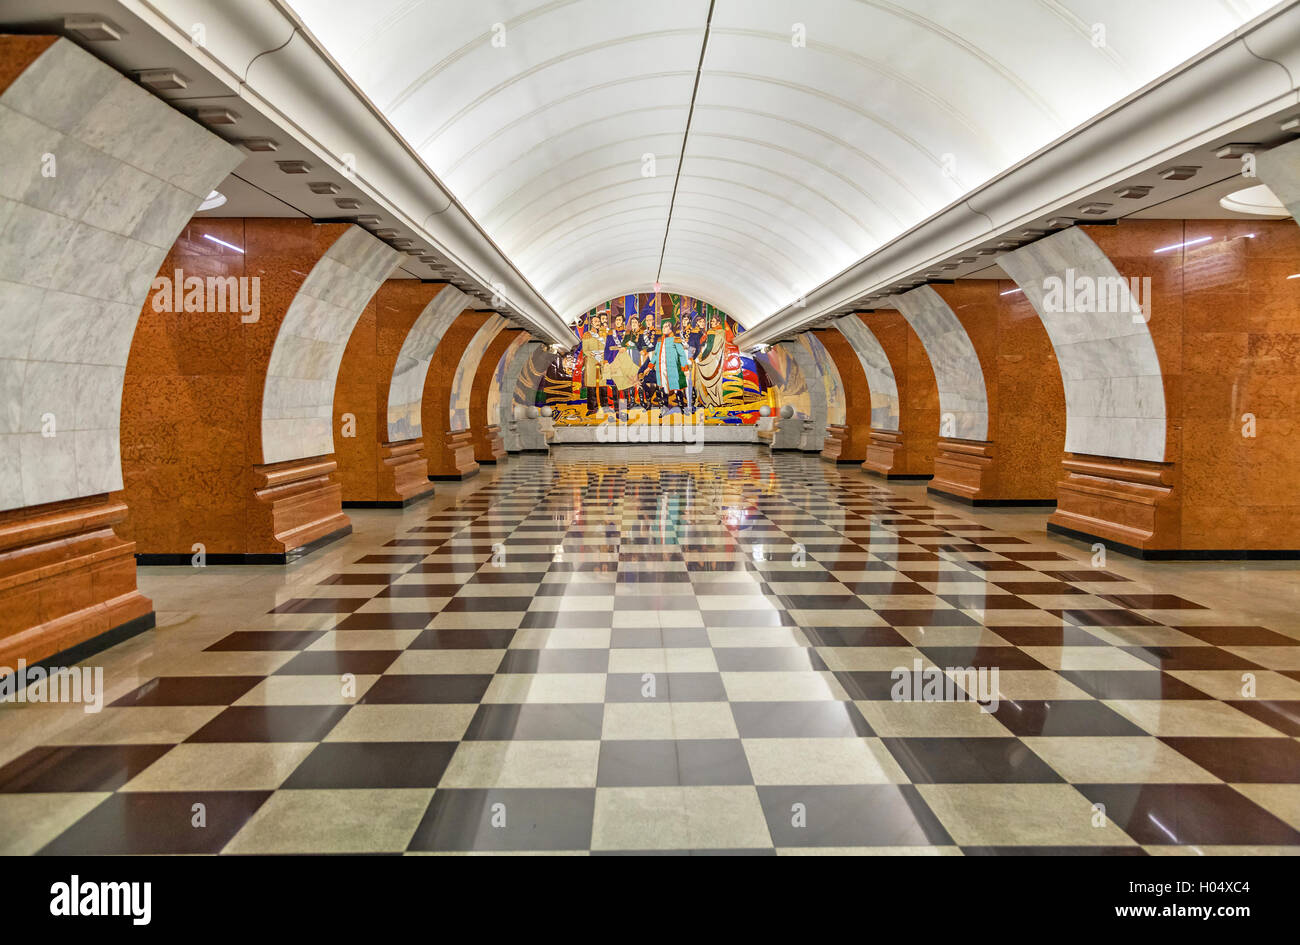 Moscou, Russie - 08 novembre 2015 : Park Pobedy gare de métro de Moscou Banque D'Images